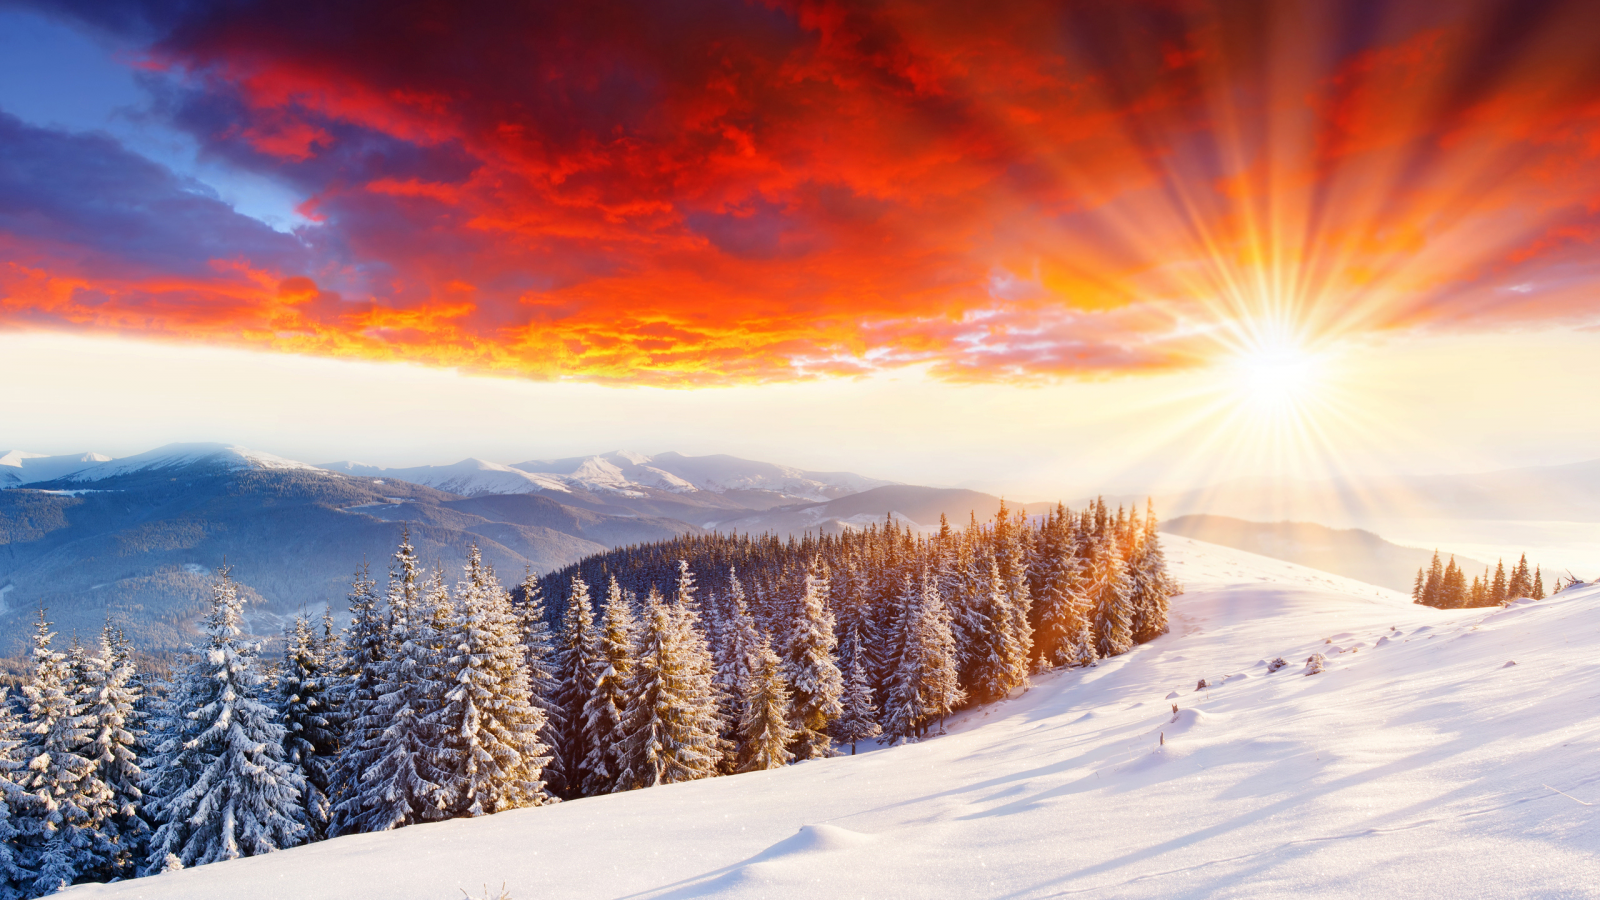 мороз, солнце, зима, дерево, зимние пейзажи, природа, свет, деревья, вьюга, утро, снегопад, холод, лучи, снег